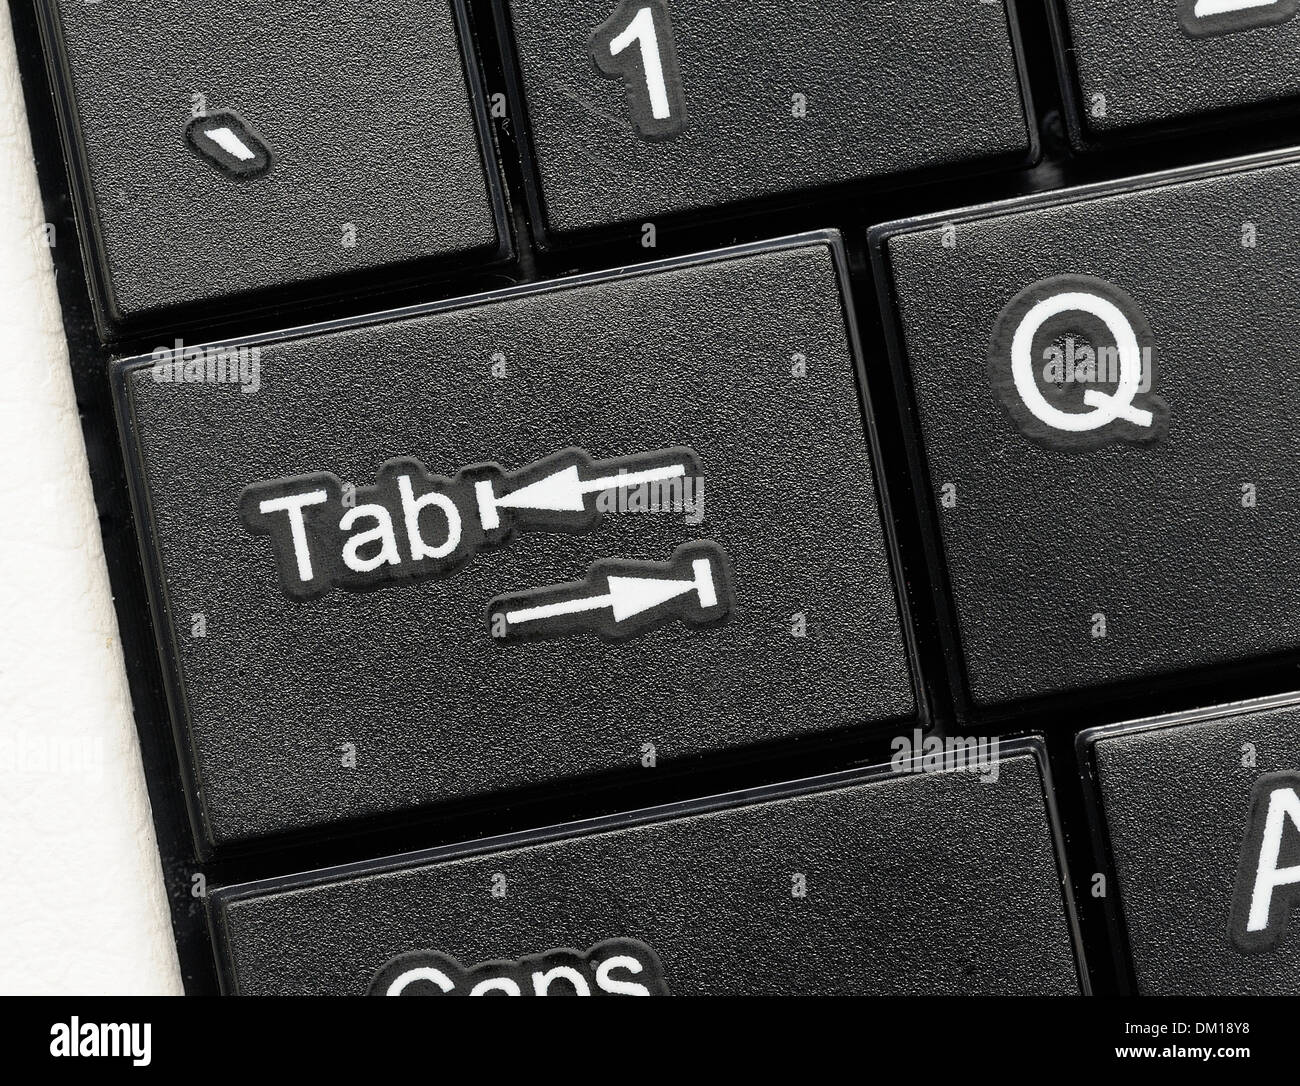 Tab key -Fotos und -Bildmaterial in hoher Auflösung – Alamy